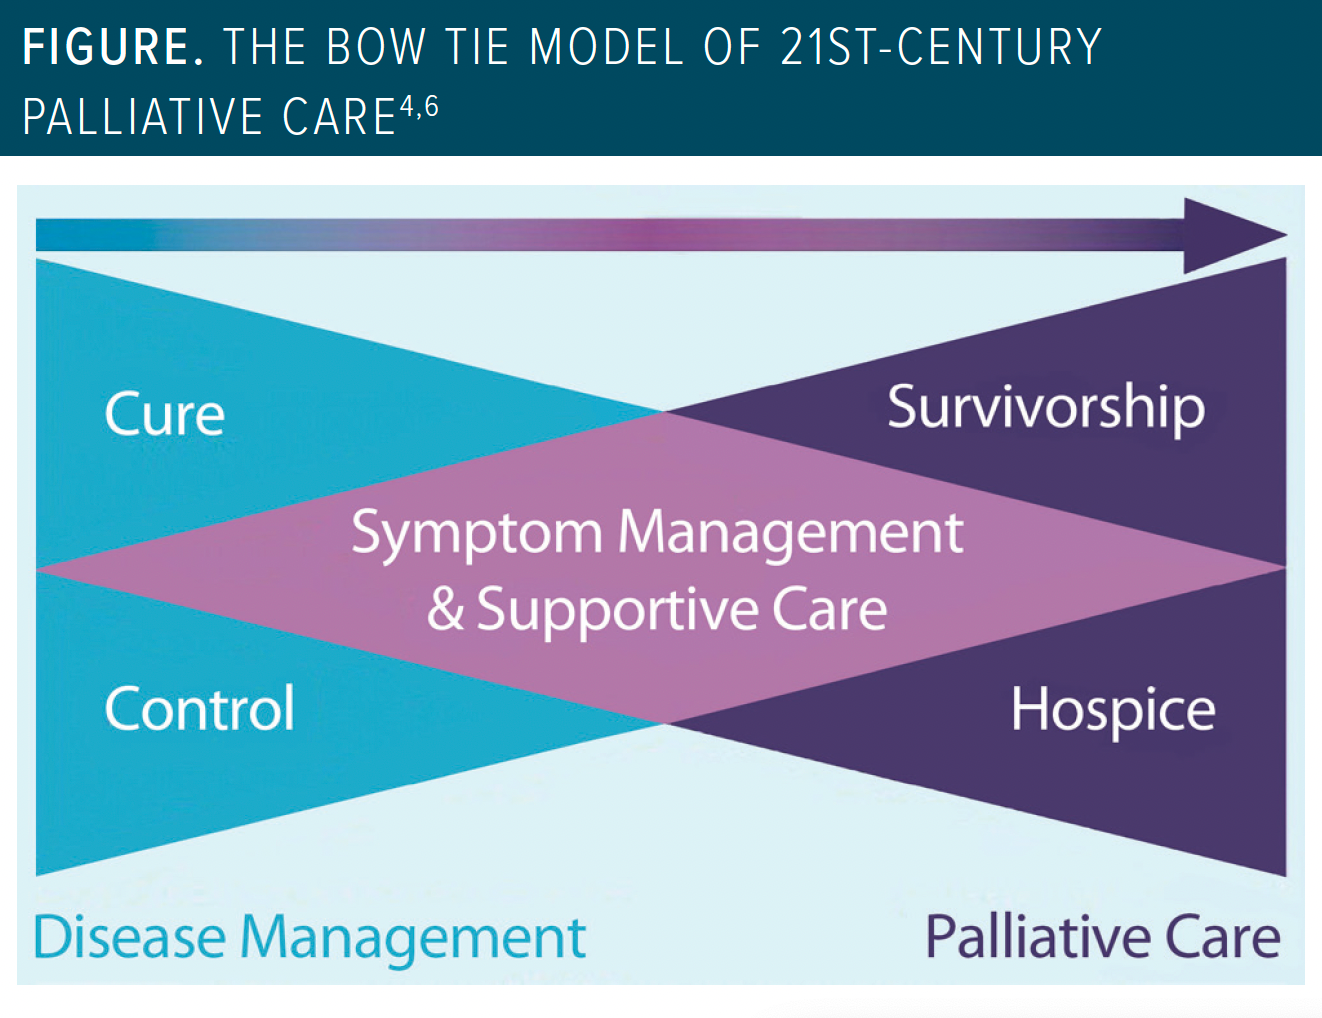 Figure: The Bow Tie Model of 21st-century palliative care.